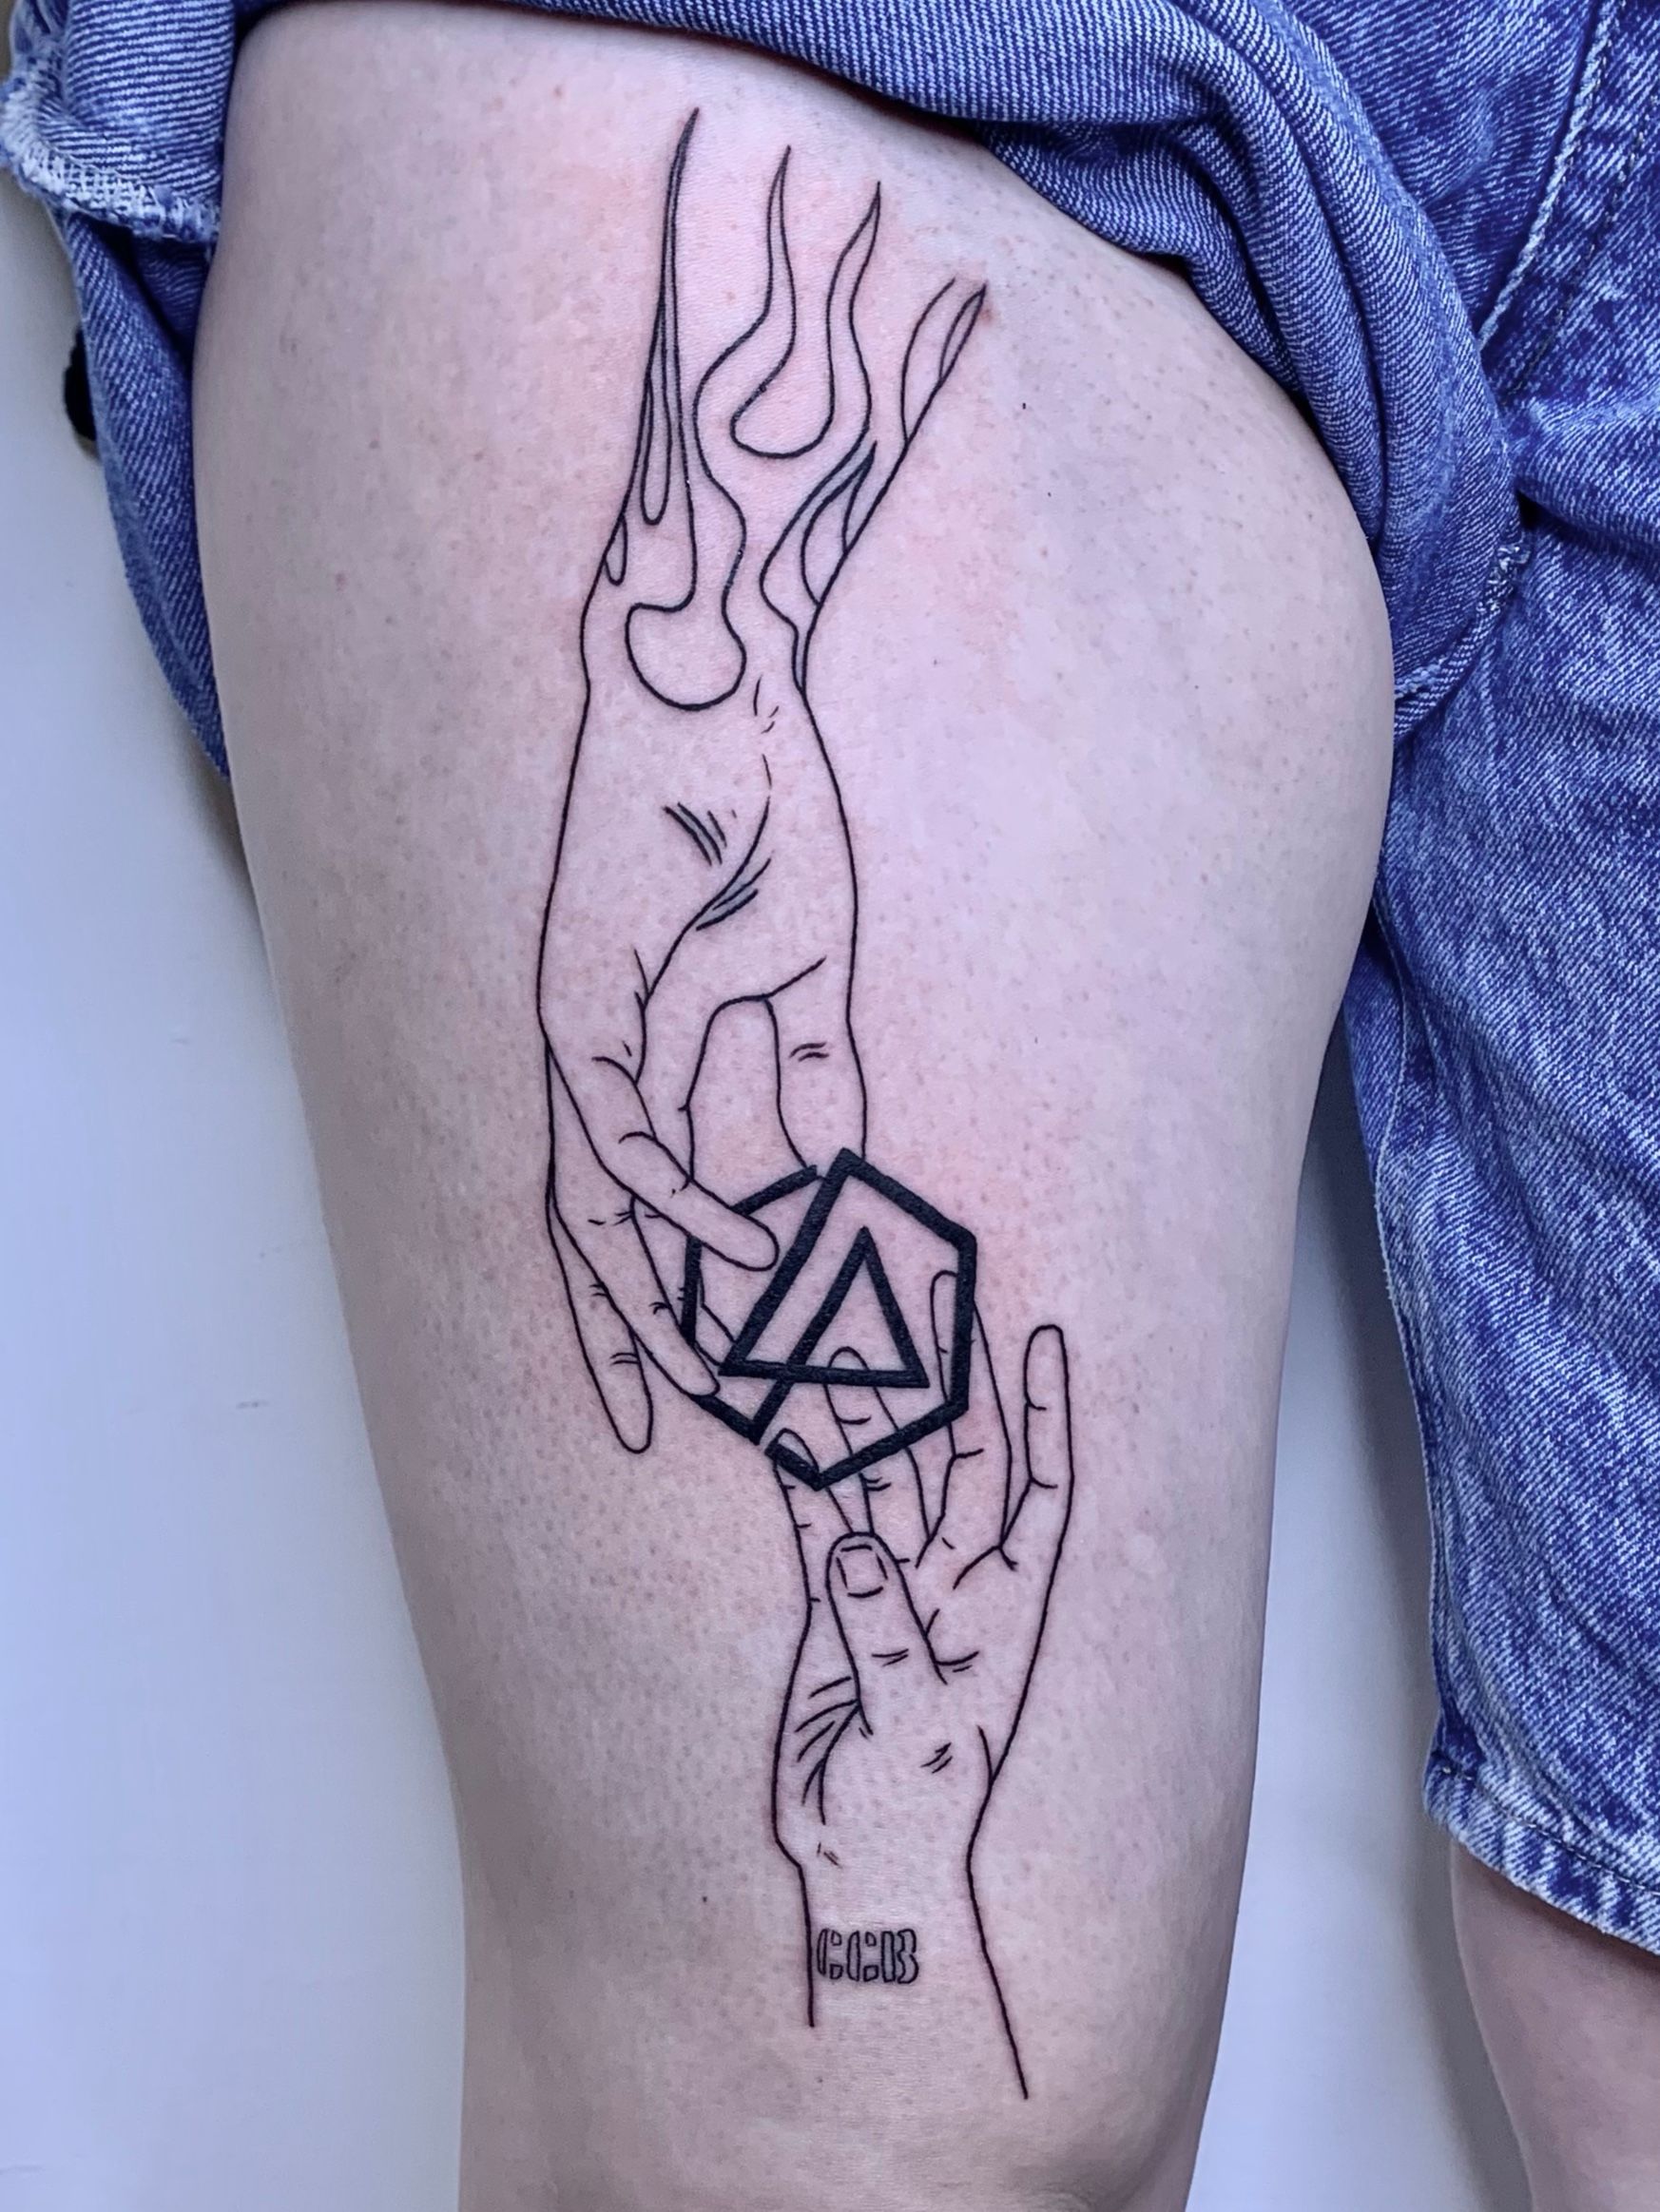 July Ayr  Linkin Park  Hybrid Theory tattoo tattoos  Facebook